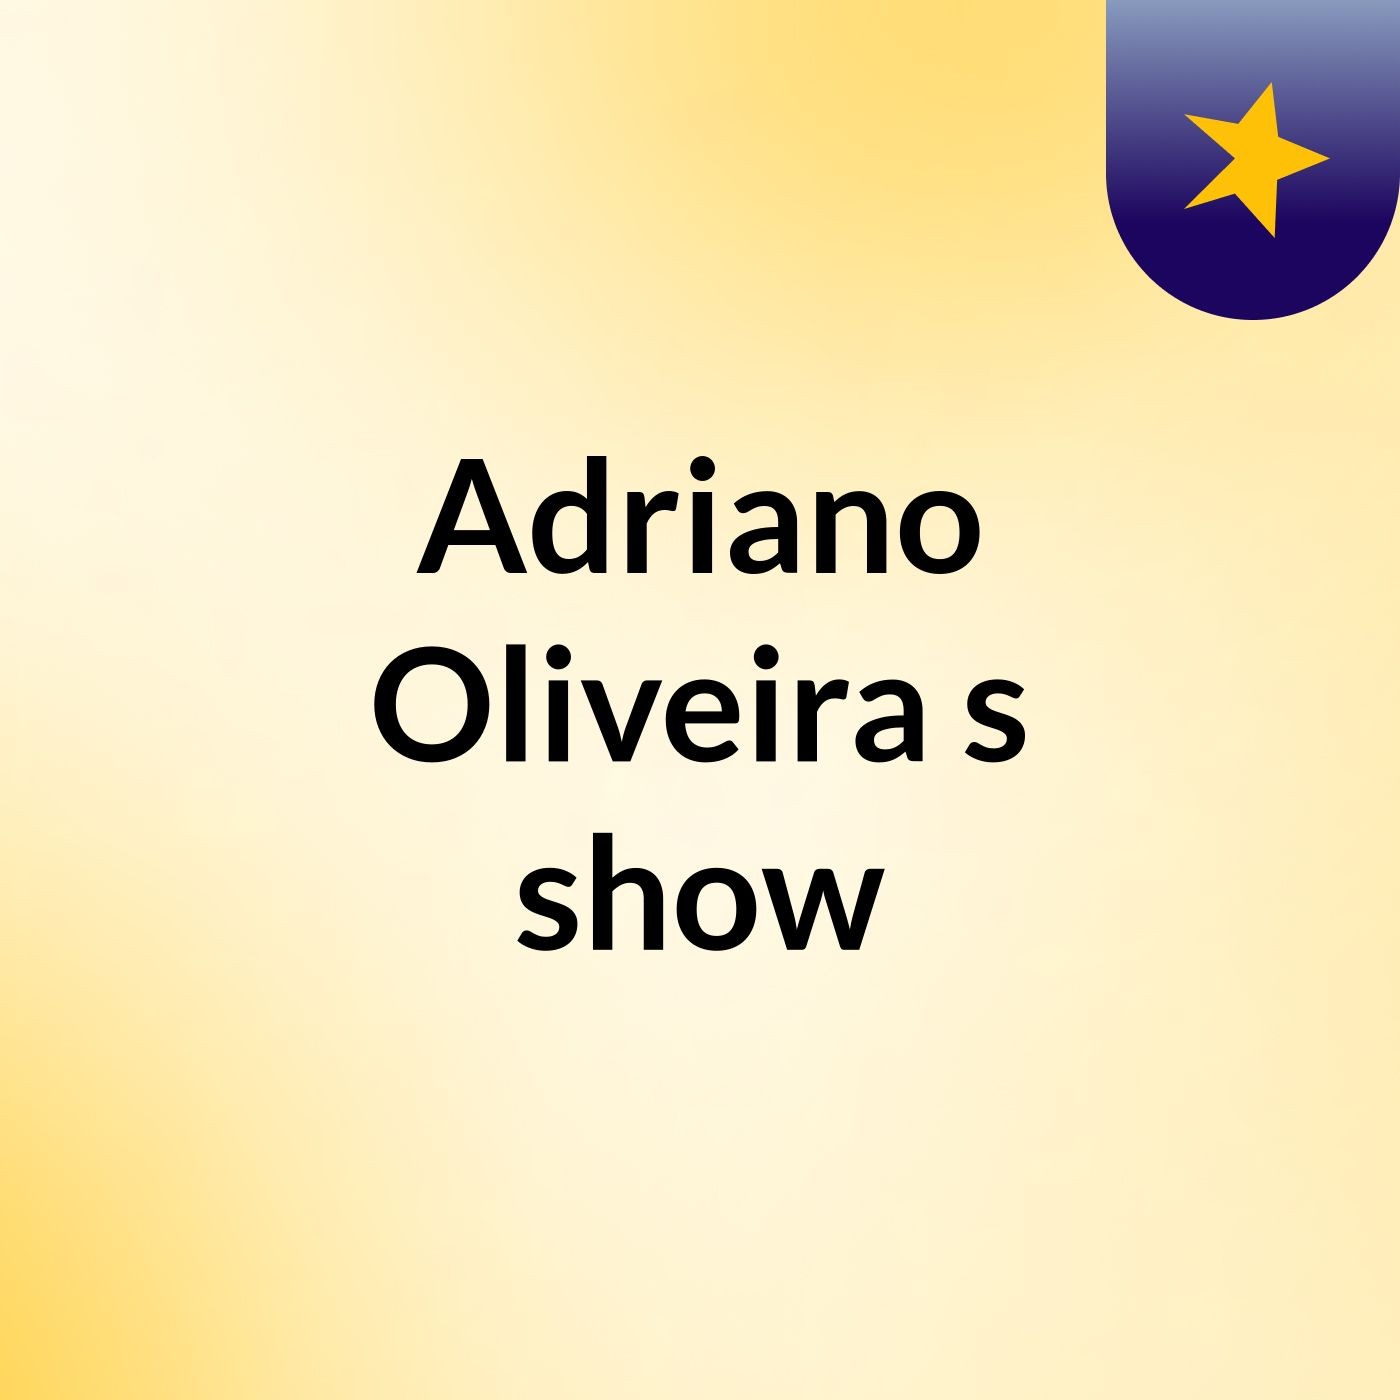 Adriano Oliveira's show